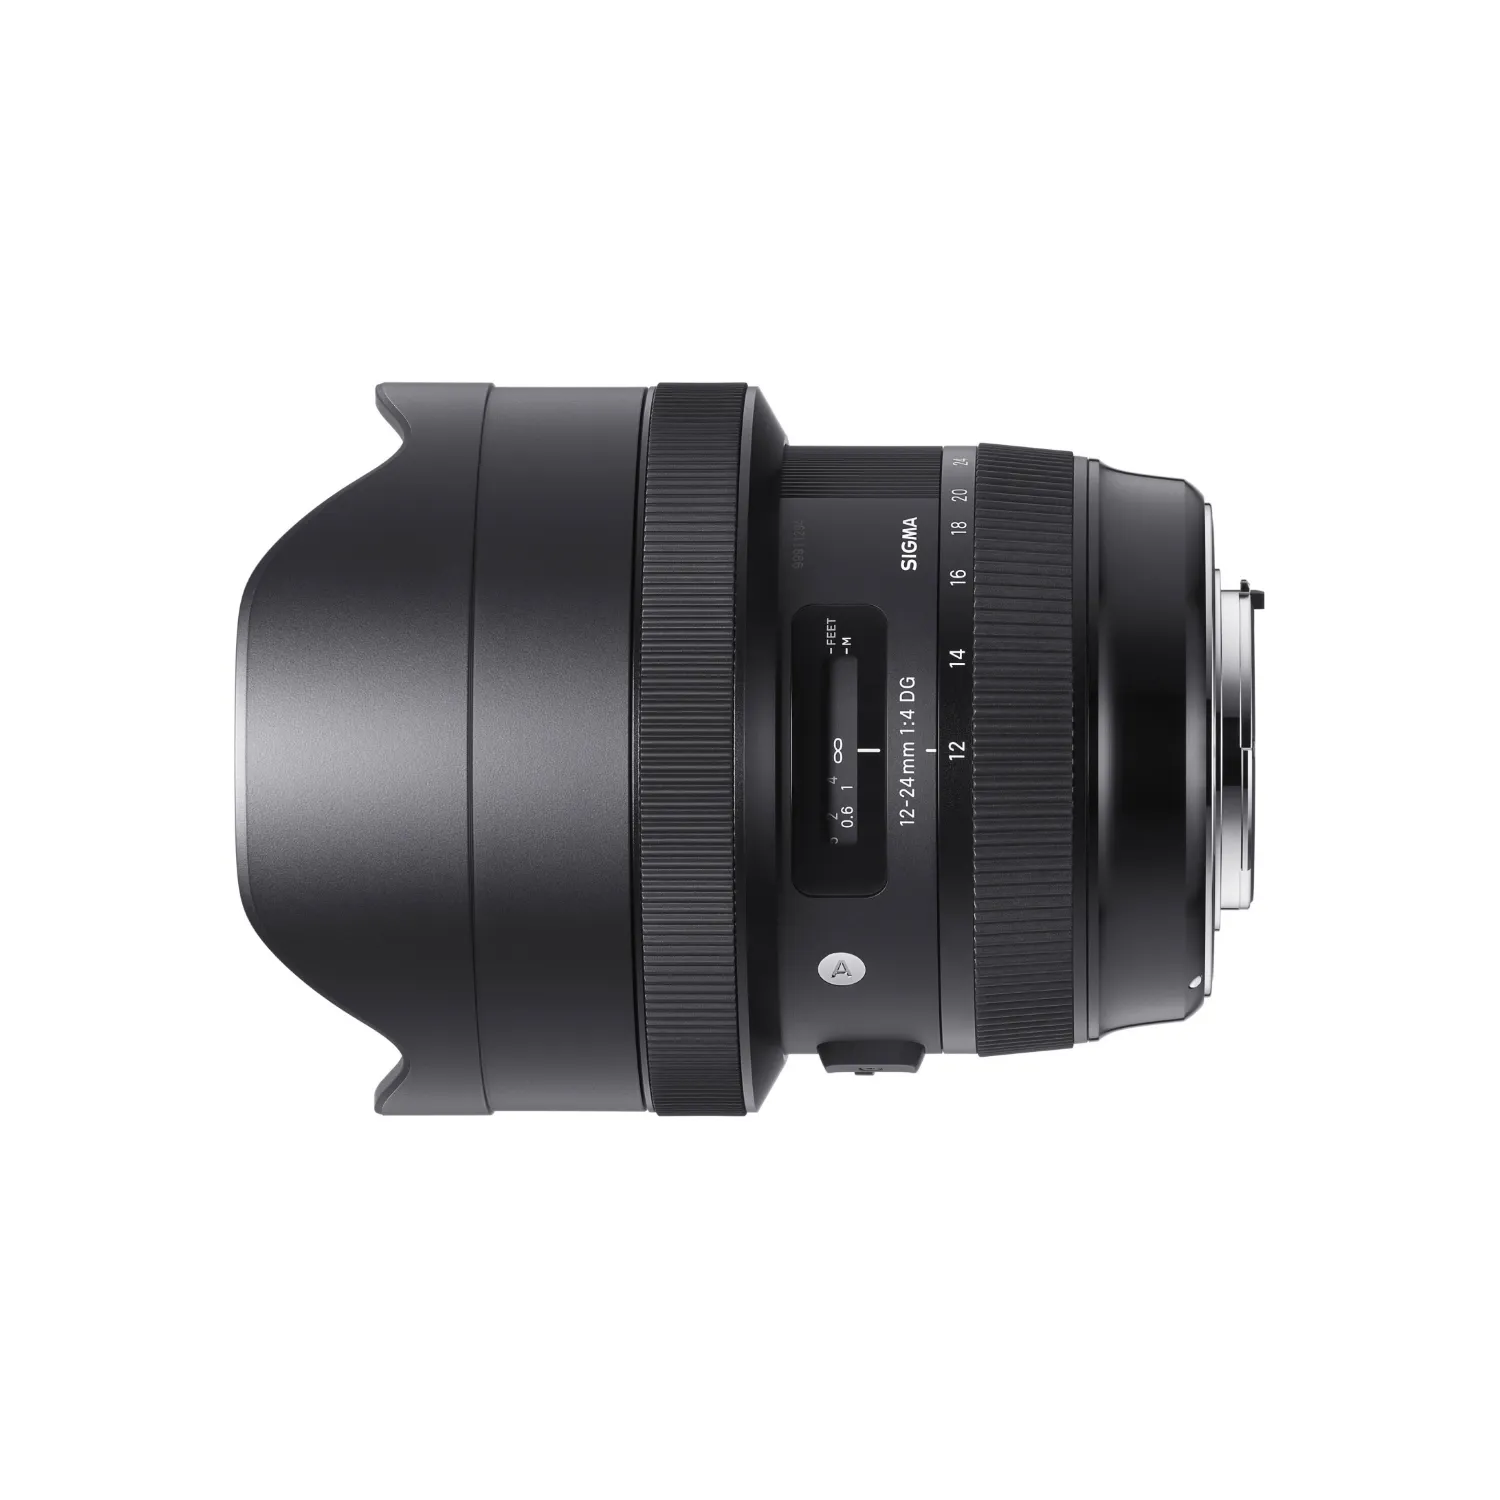 Sigma 12-24mm f/4.0 DG HSM Art Lens